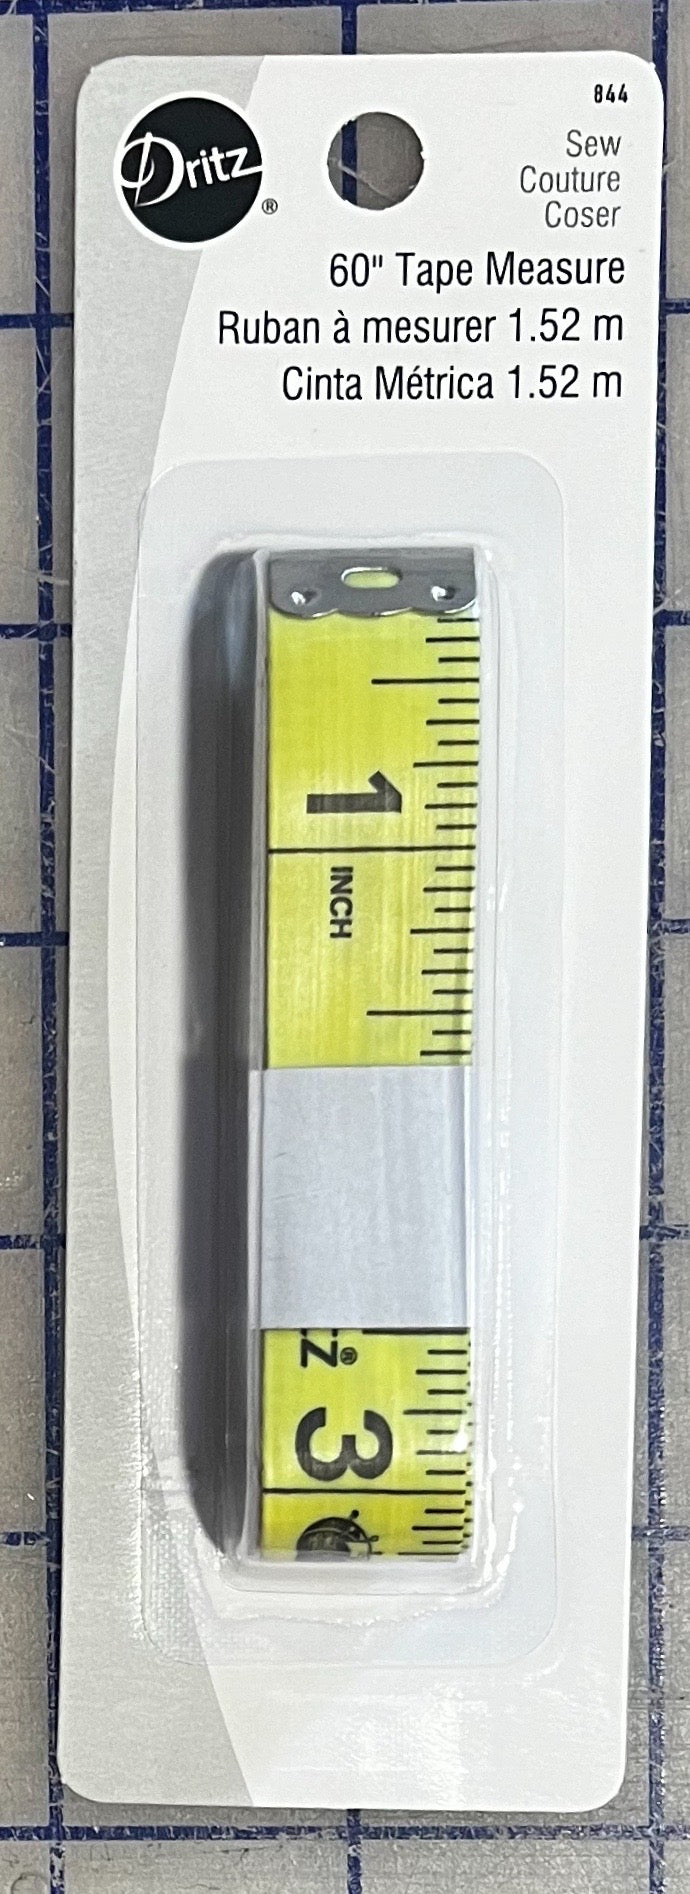 Tape Measure 5/8